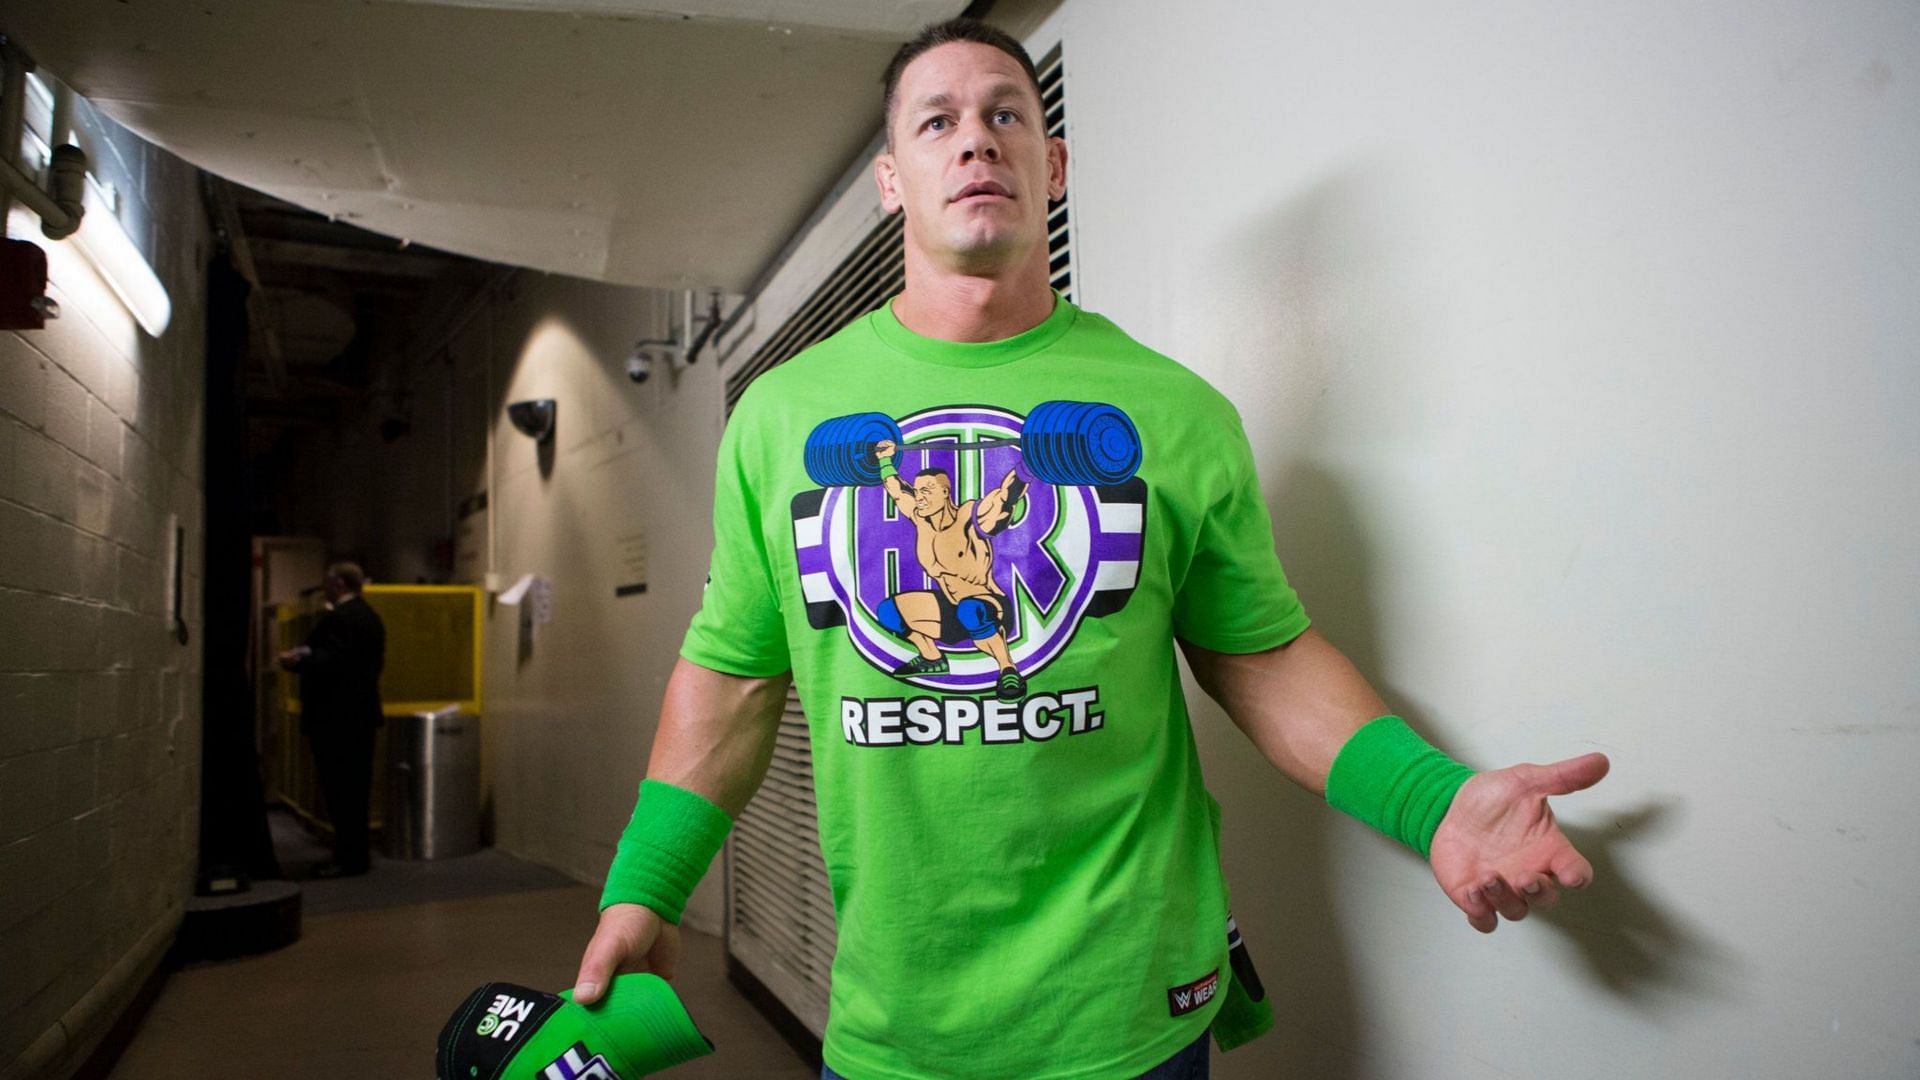 16-time WWE world champion John Cena